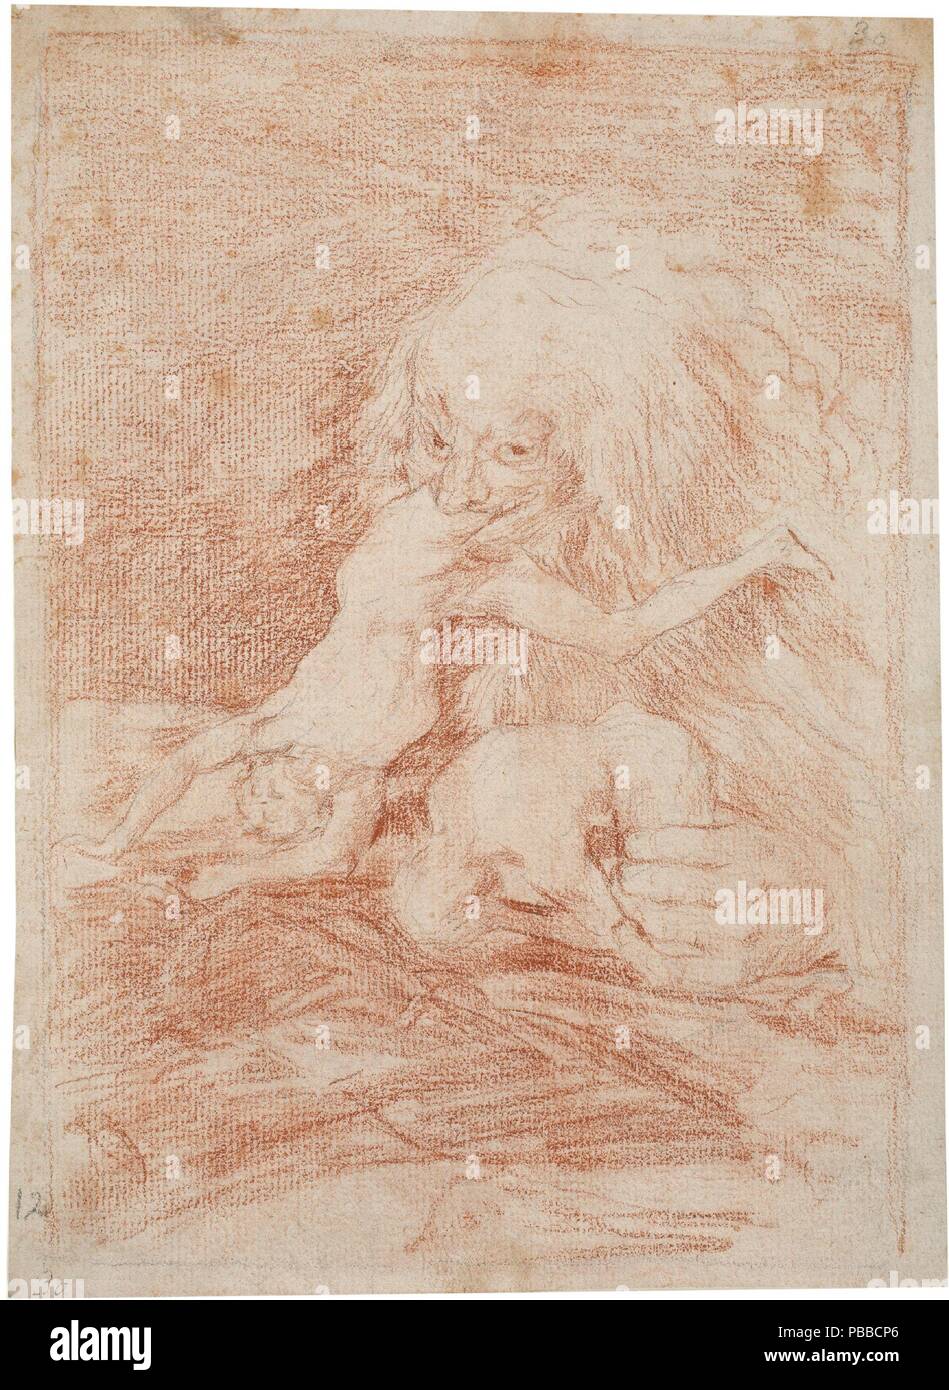 Francisco de Goya y Lucientes/aturn seiner Söhne devouting. 1797 - 1798. Rote Kreide auf Elfenbein Bütten. Museum: Museo del Prado, Madrid, España. Stockfoto